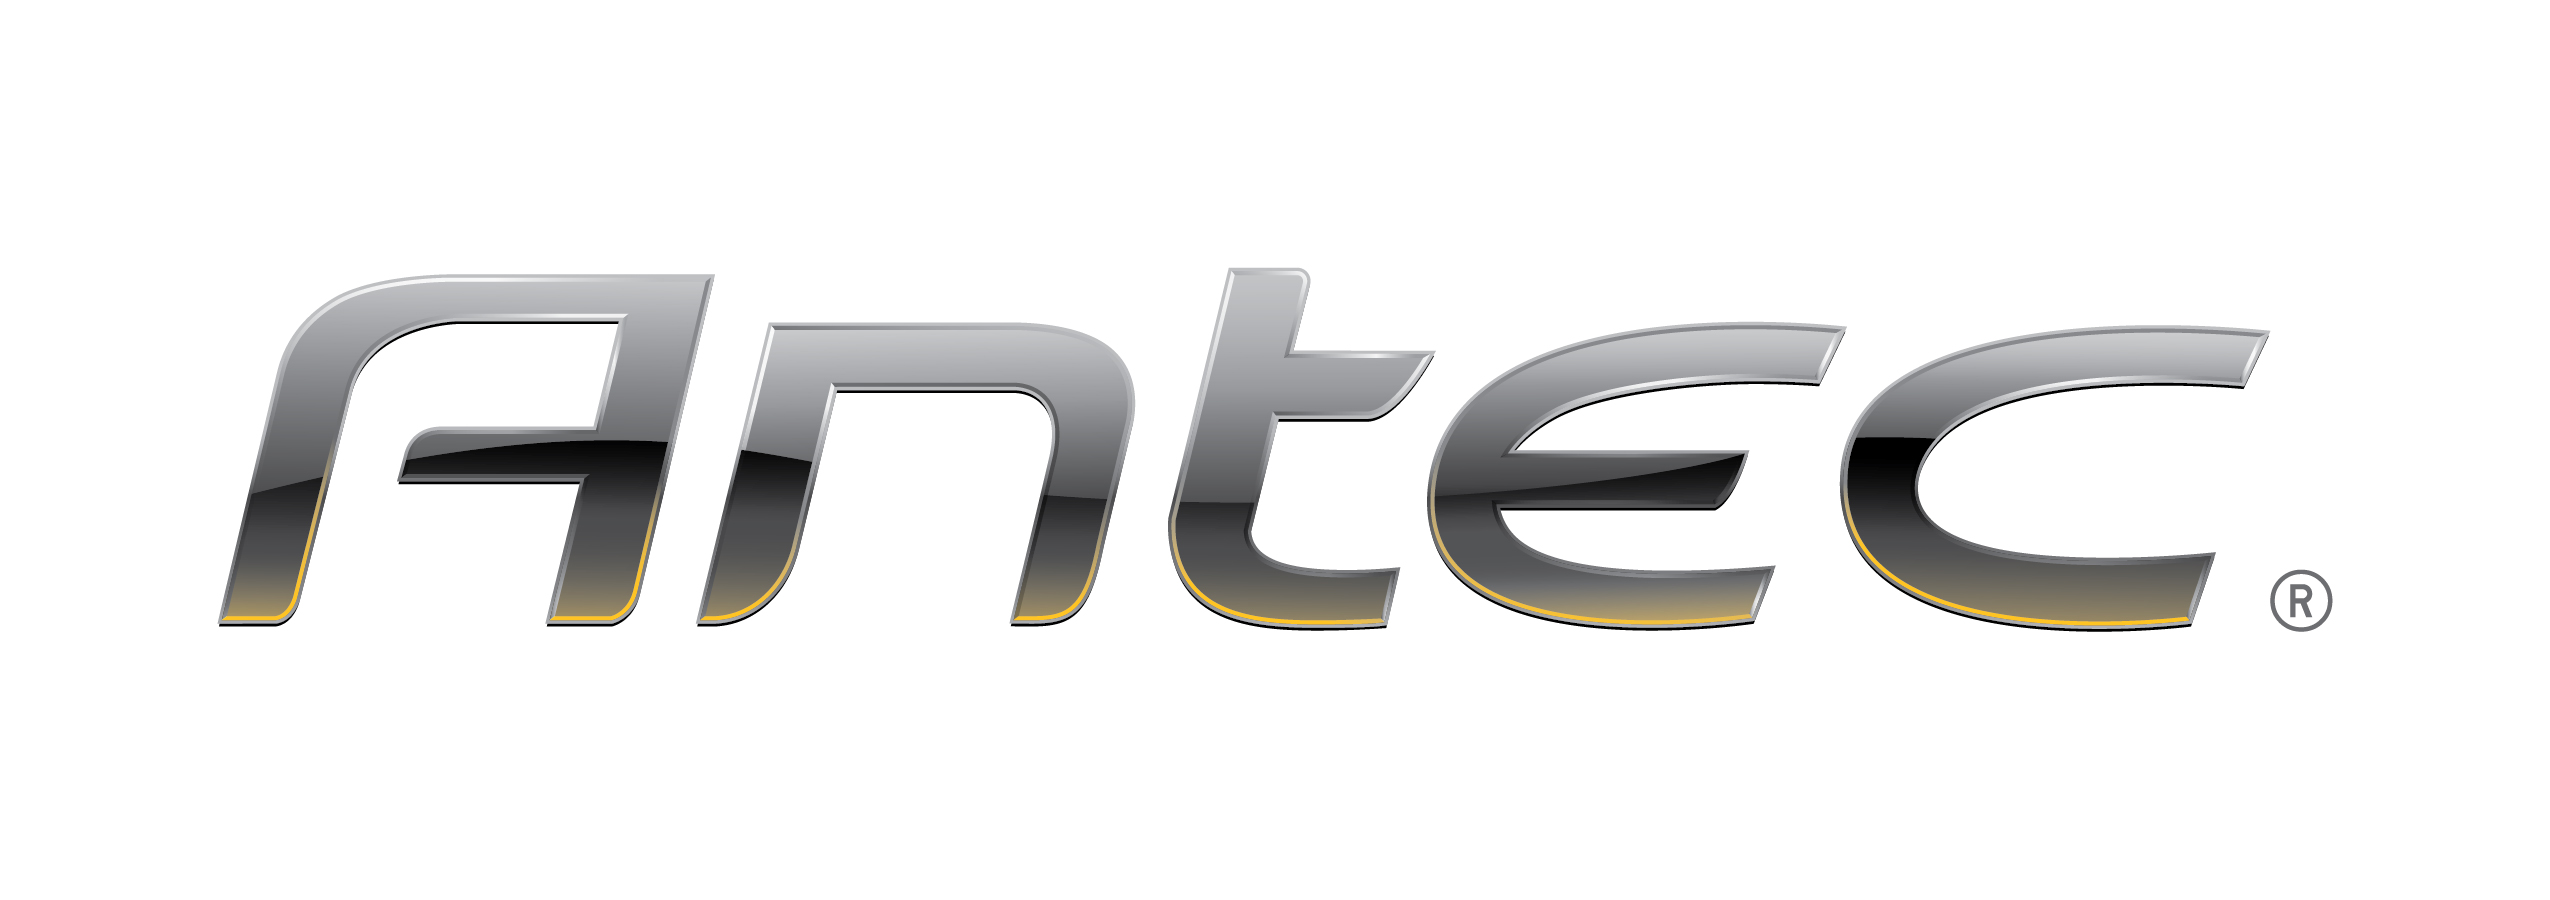 Antec Logo photo - 1